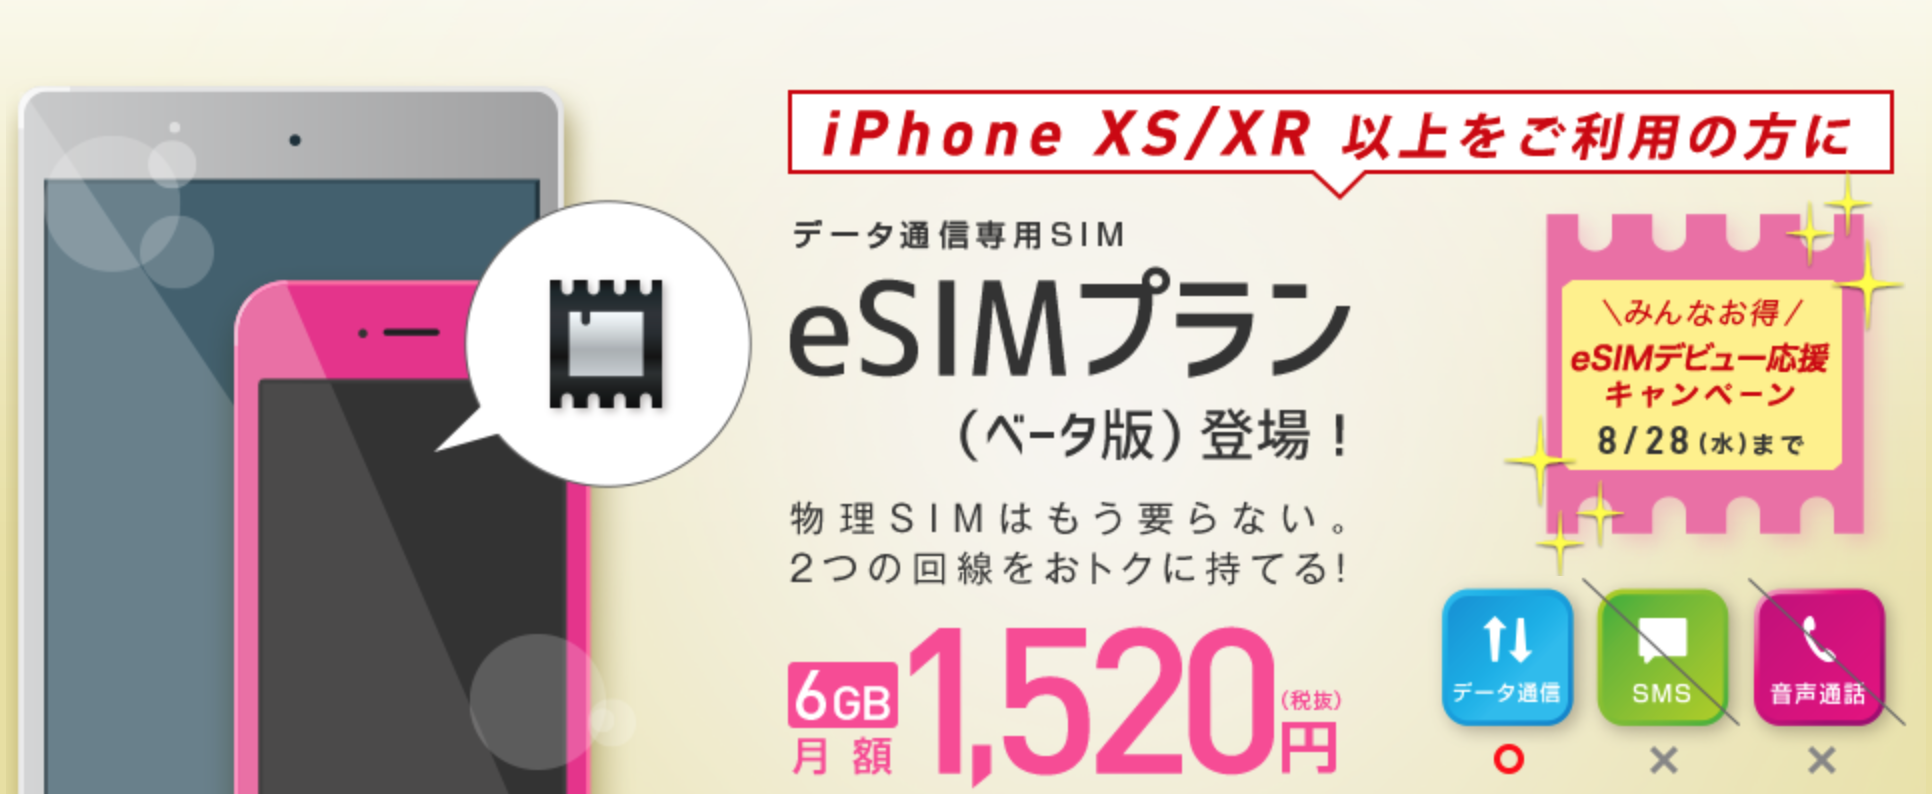 [IIJmio]eSIMデータ通信サービスを7月18日より提供開始　iPad iPhone XS/XRなど対応